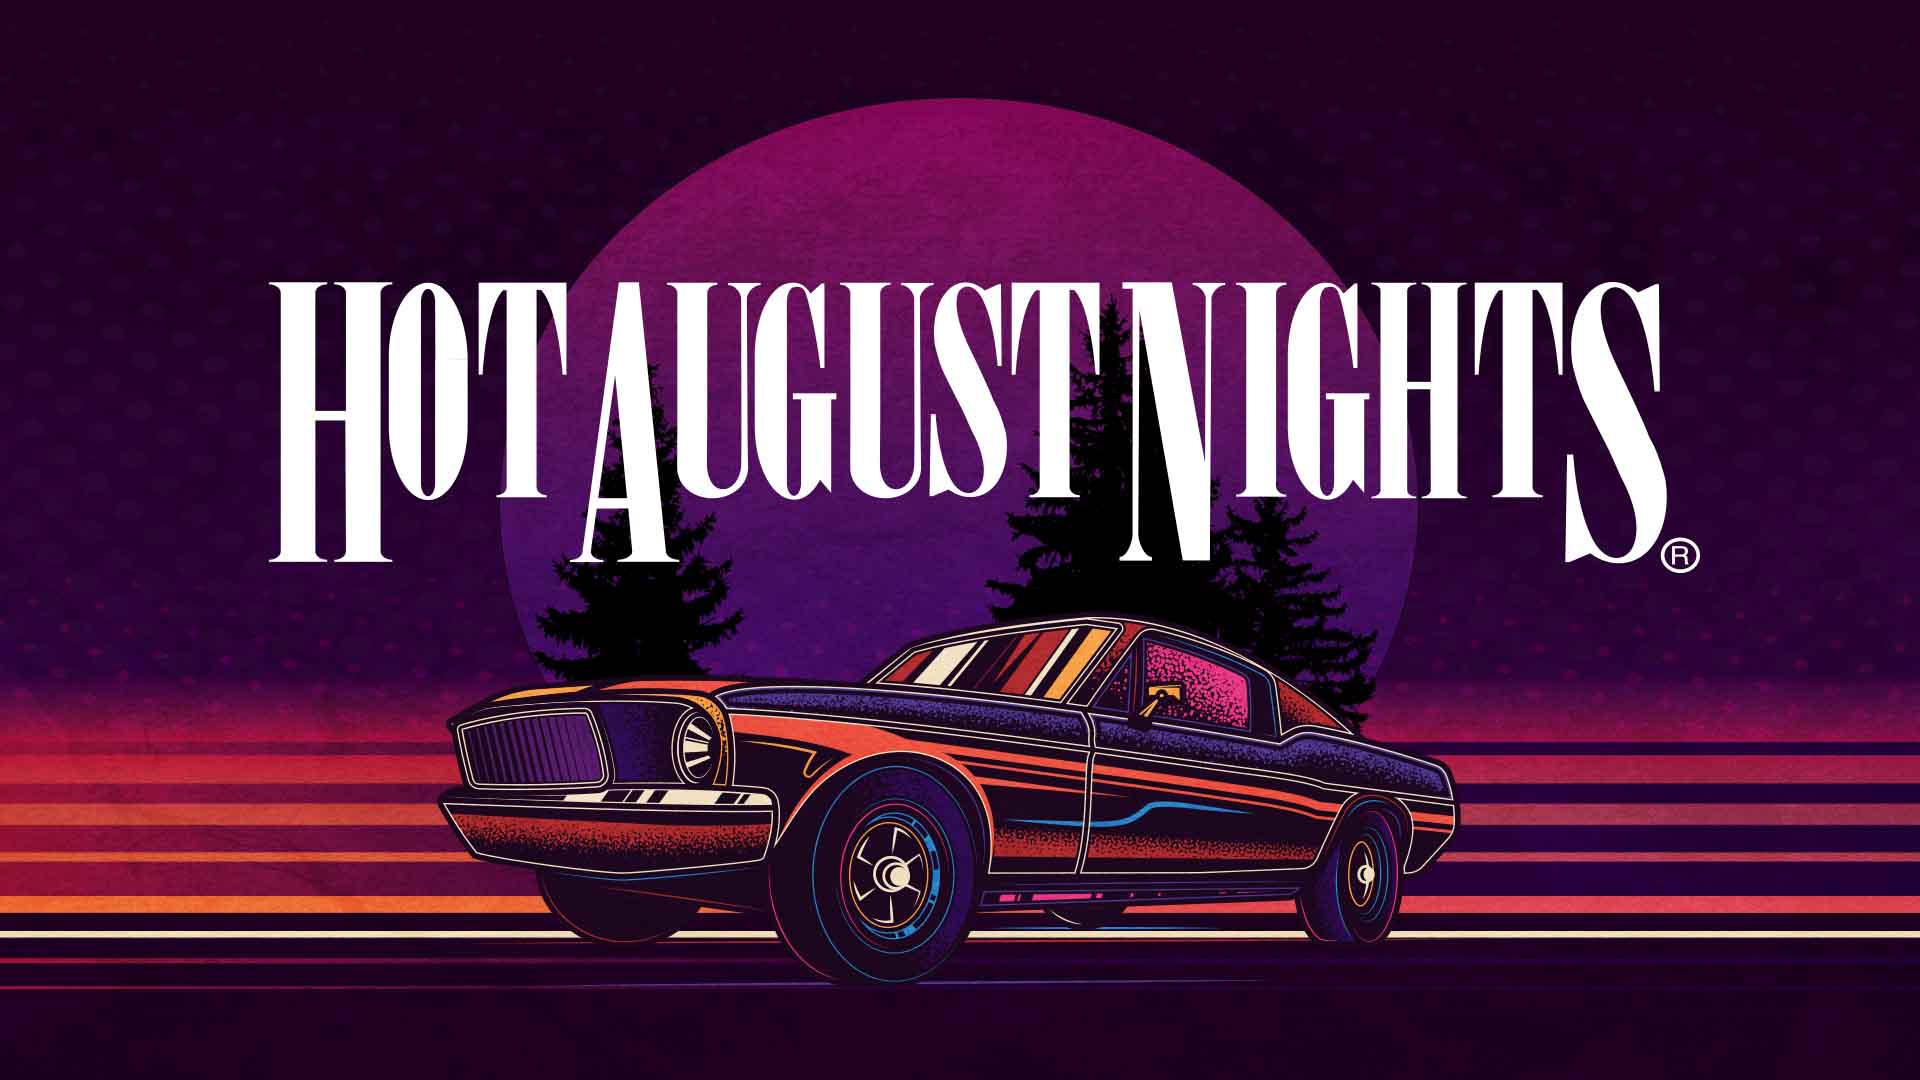 Hot August Nights flyer